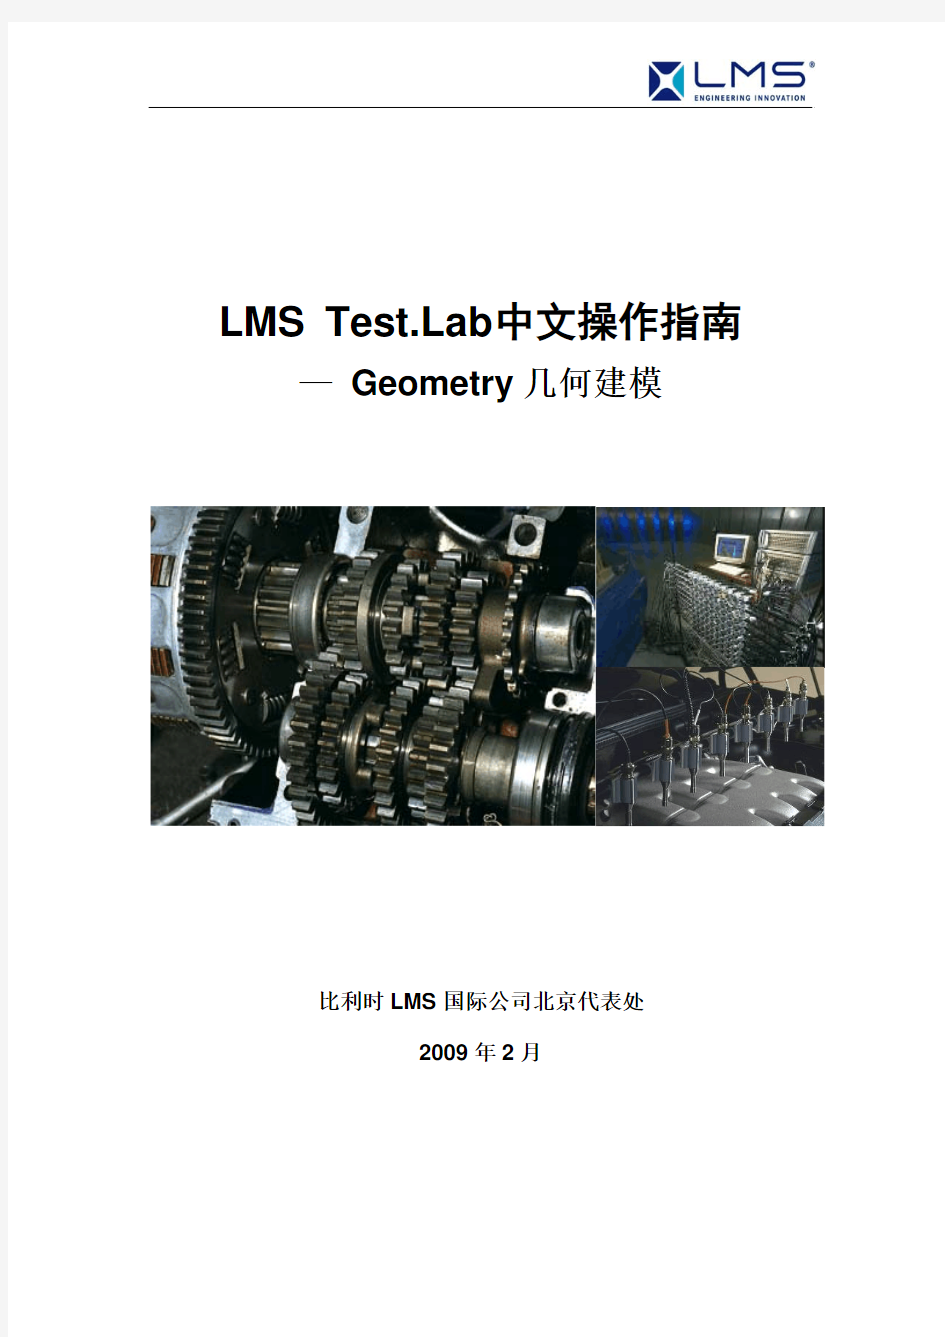 LMS Test.Lab中文操作指南_Geometry几何建模